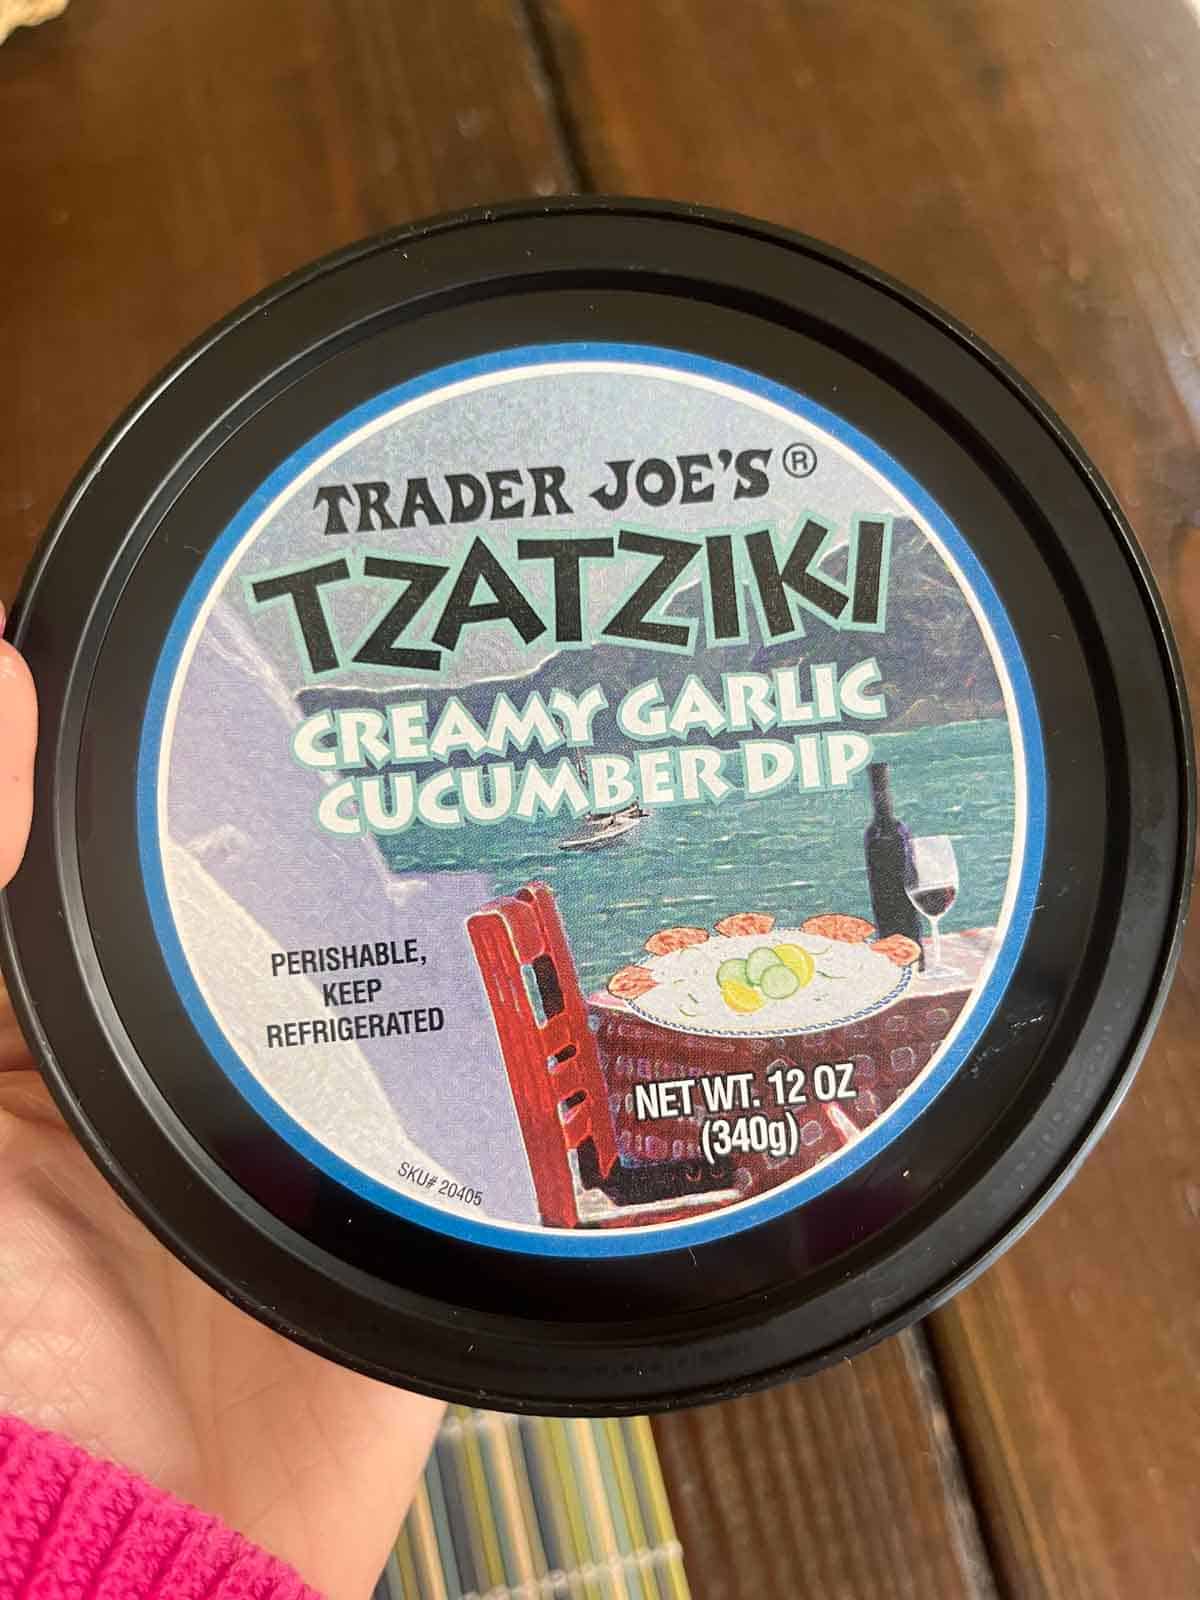 Trader Joe's tzatziki sauce.